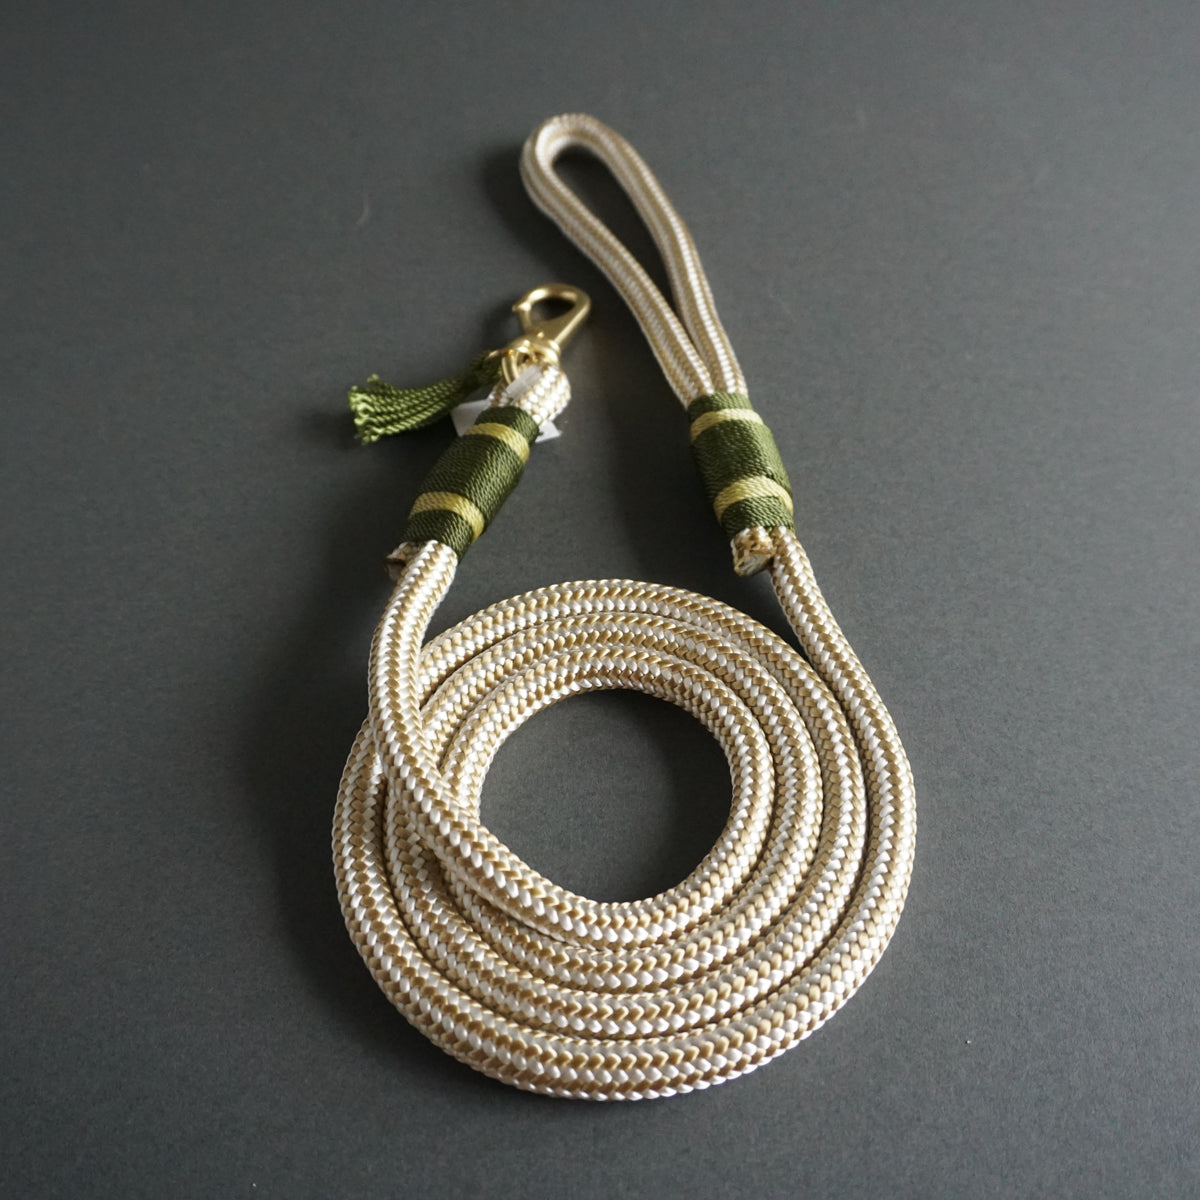 Rugged Wrist Dog Leash in Olive Green Rope with Tassle